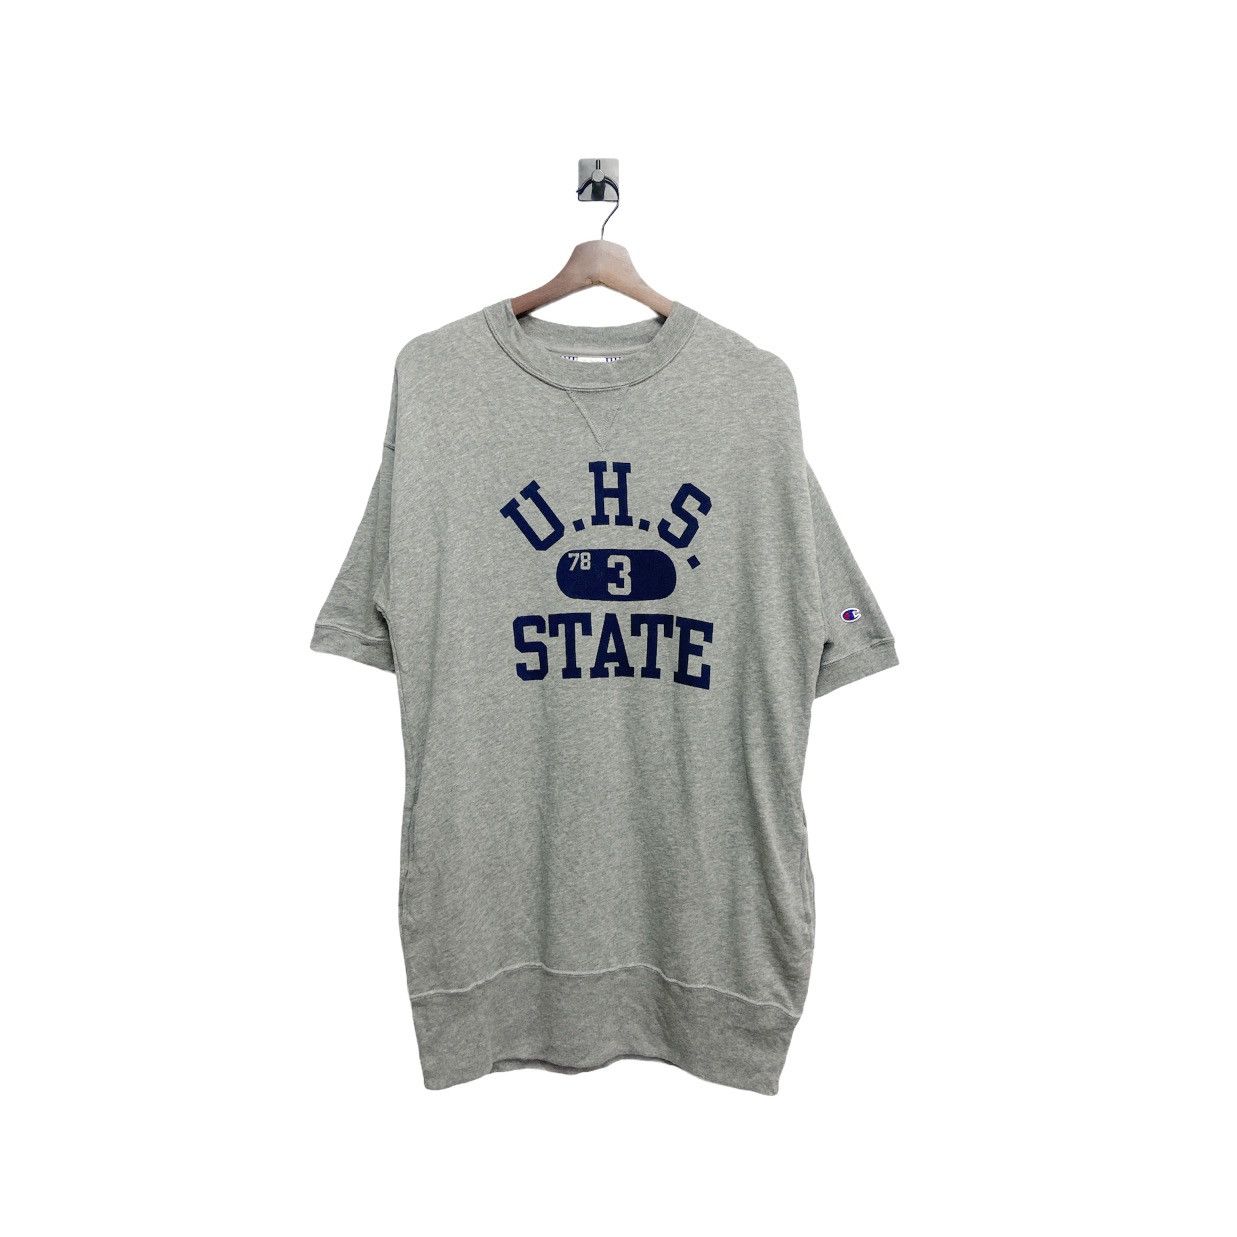 Champion U.H.S State Sweatshirt Size M - 1